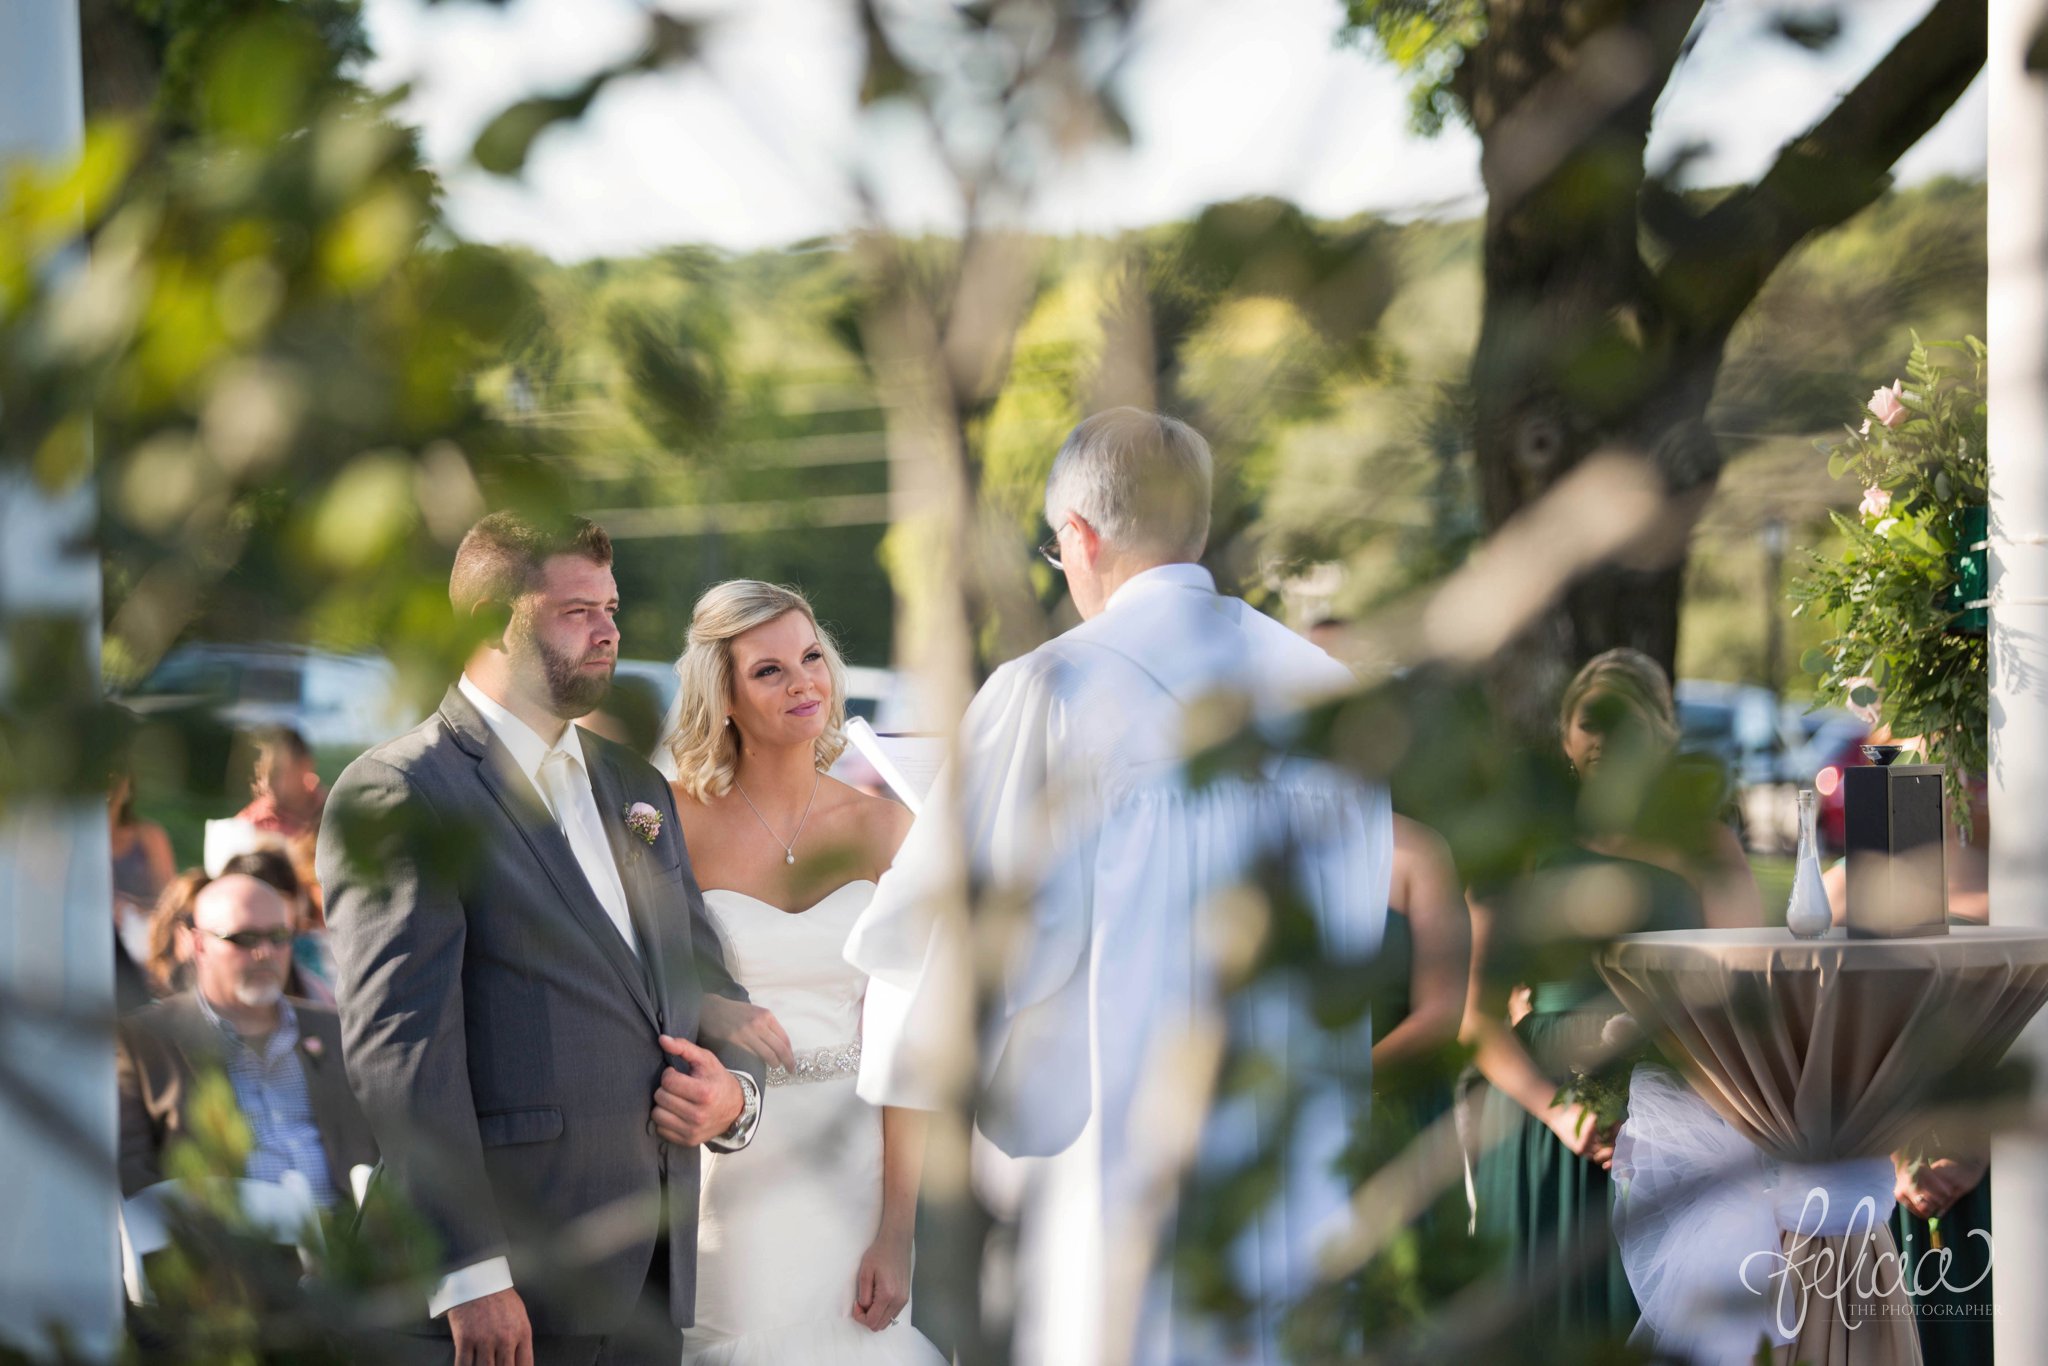 Outdoor Ceremony Candids | Eighteen Ninety | Kansas City Wedding Venue | Felicia The Photographer